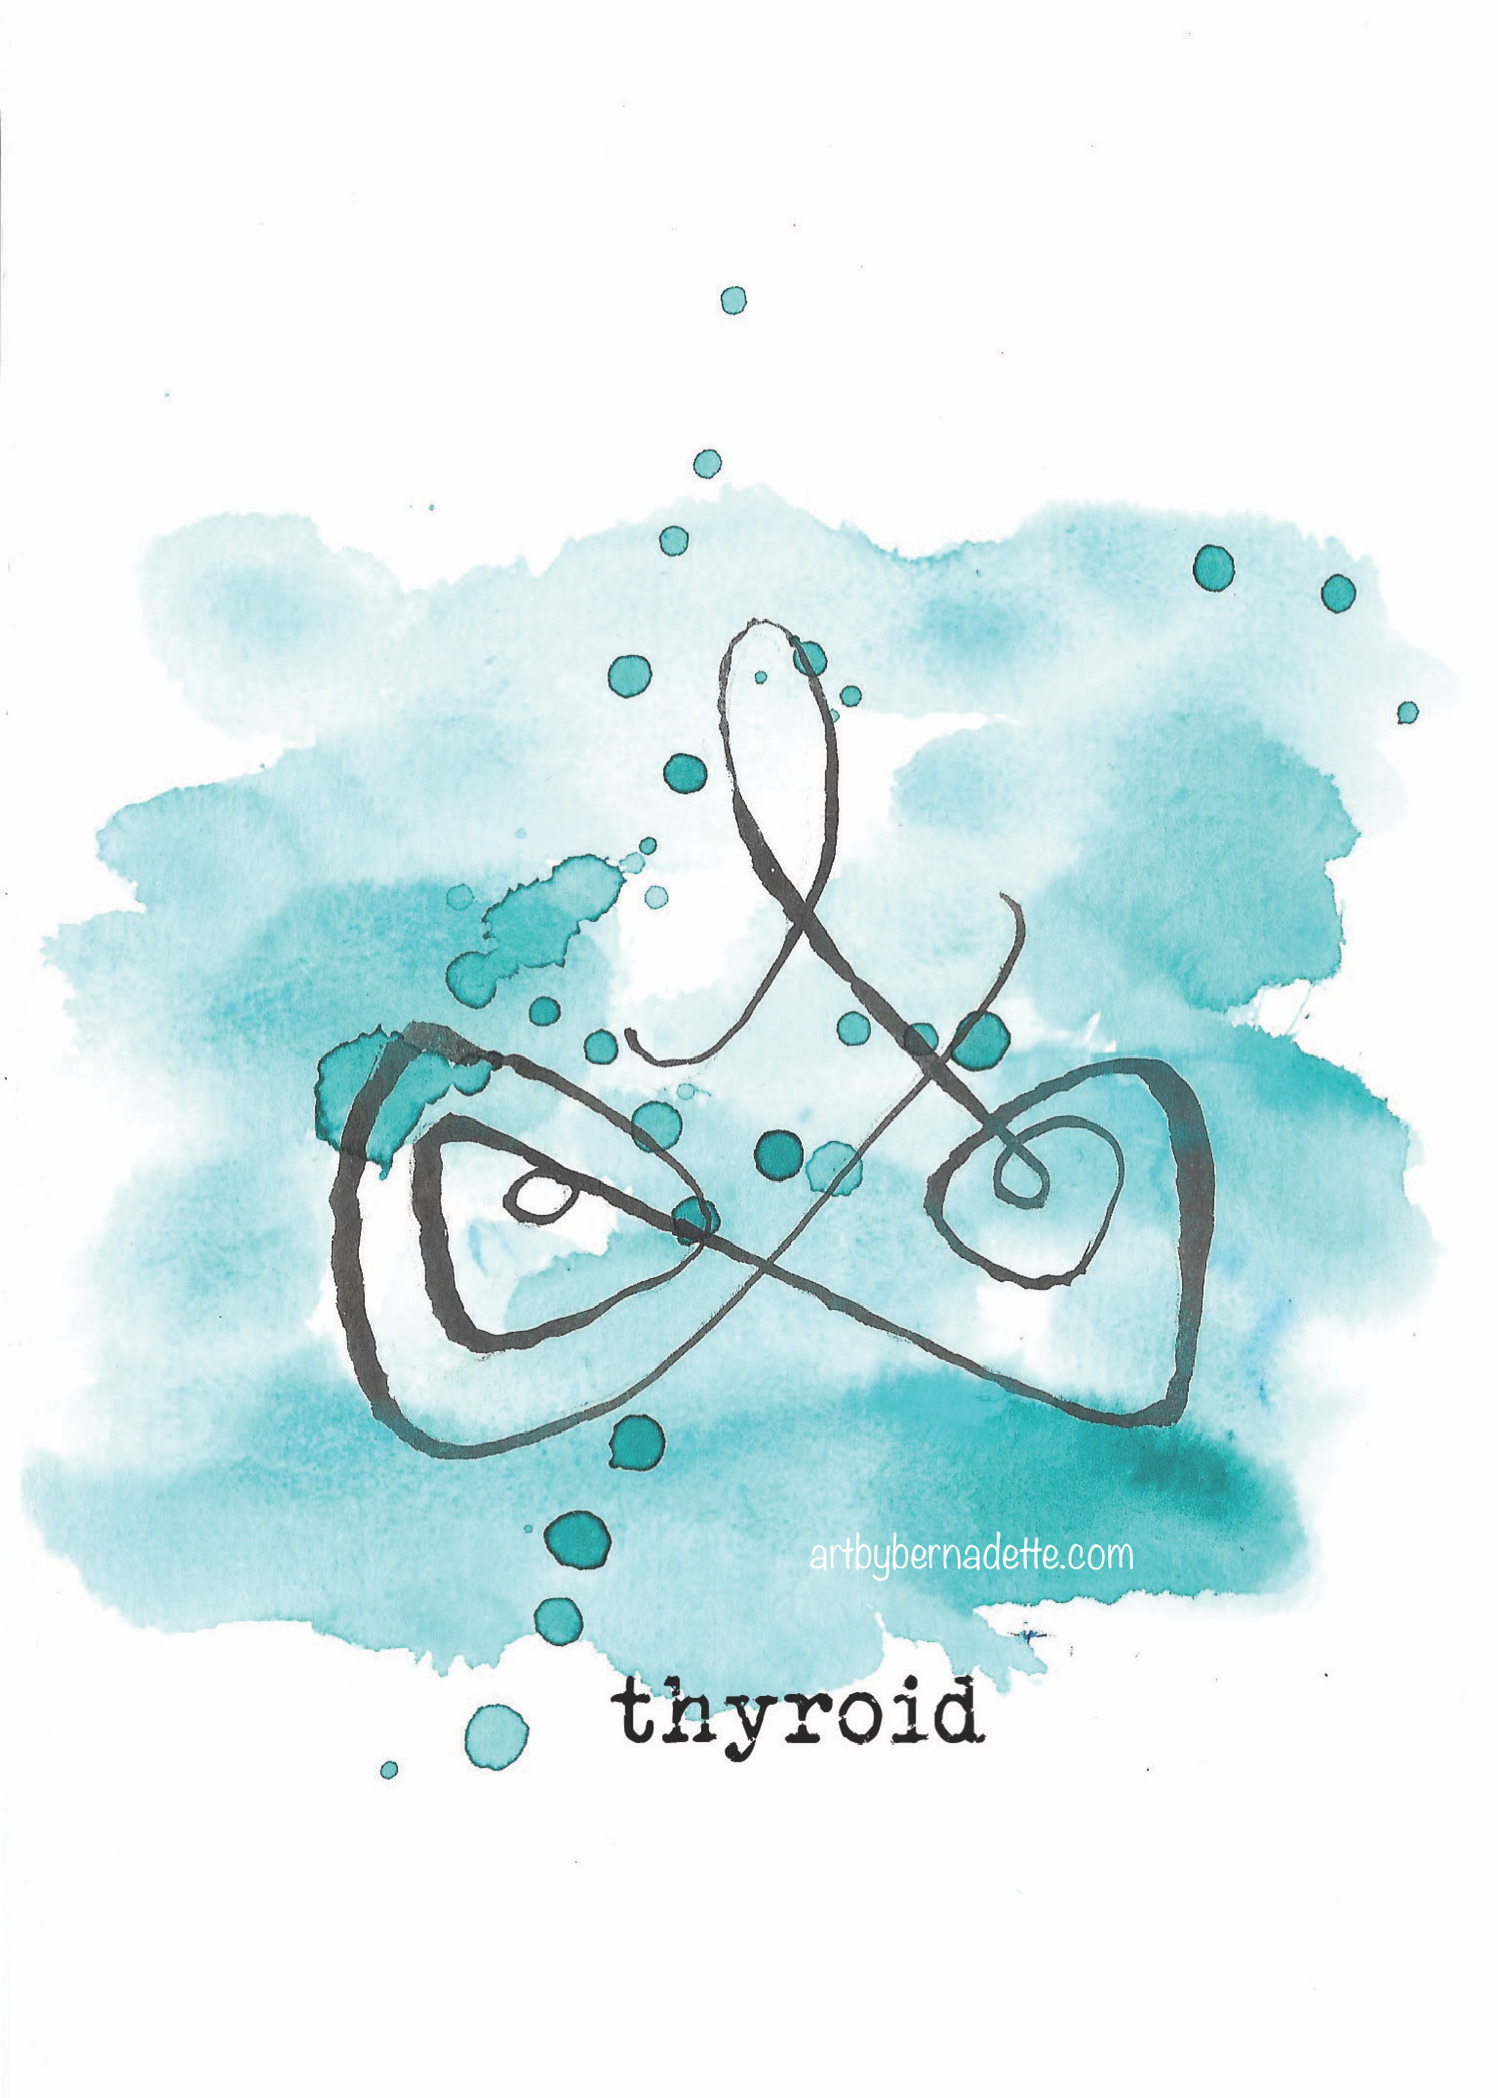 Biogeometry image thyroid 02